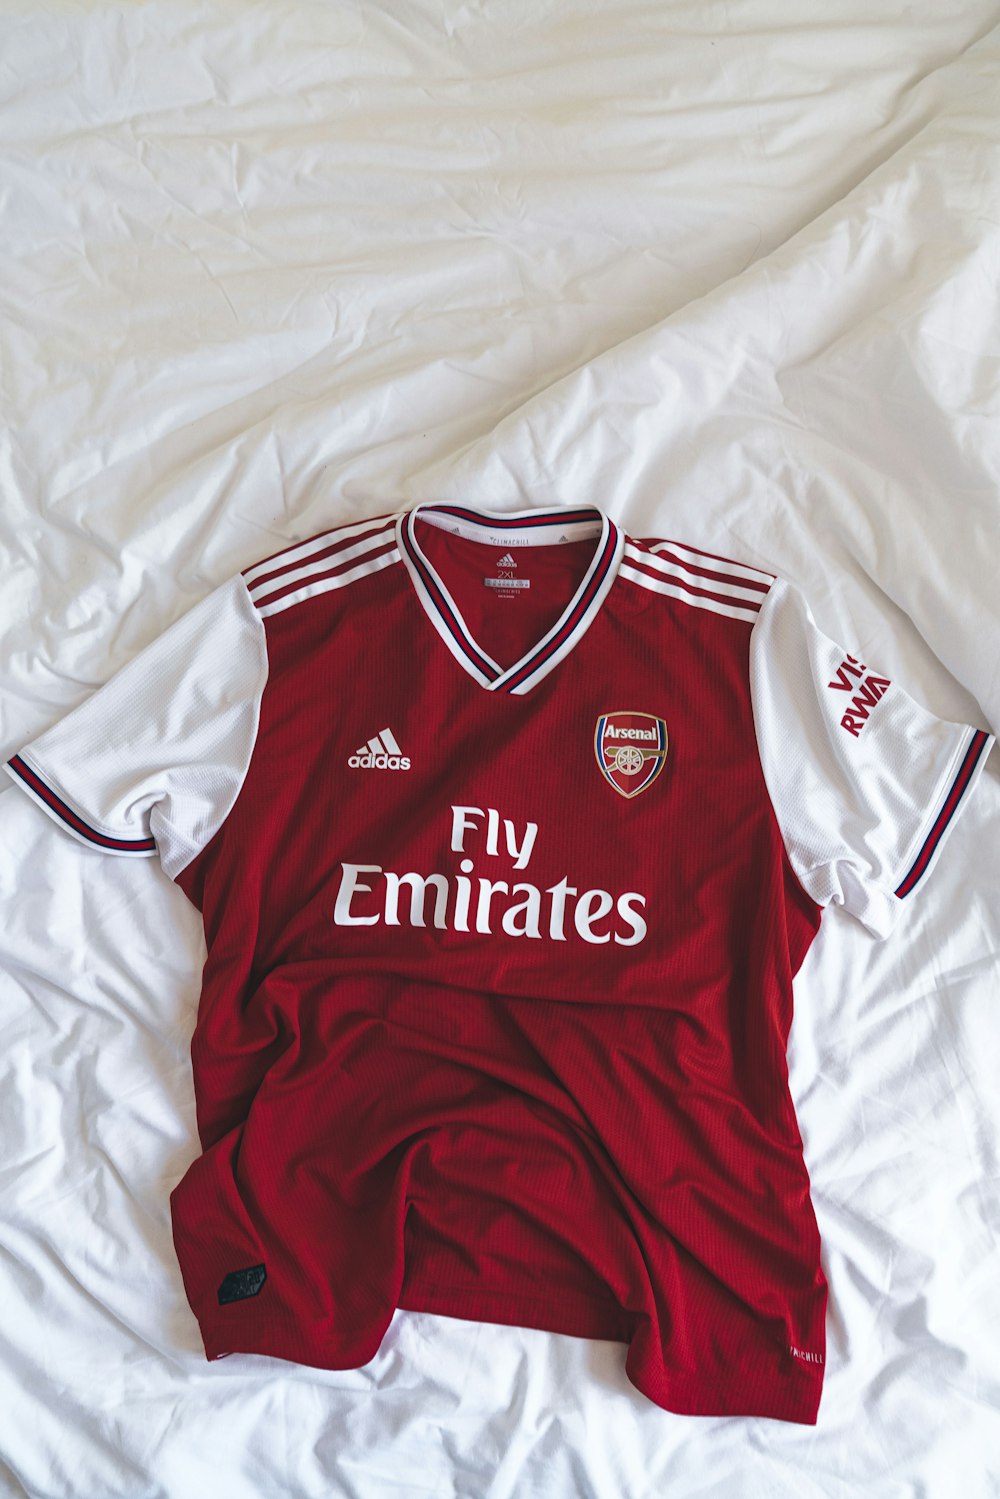 cent Sophie toenemen Red and white adidas fly emirates shirt photo – Free Arsenal Image on  Unsplash